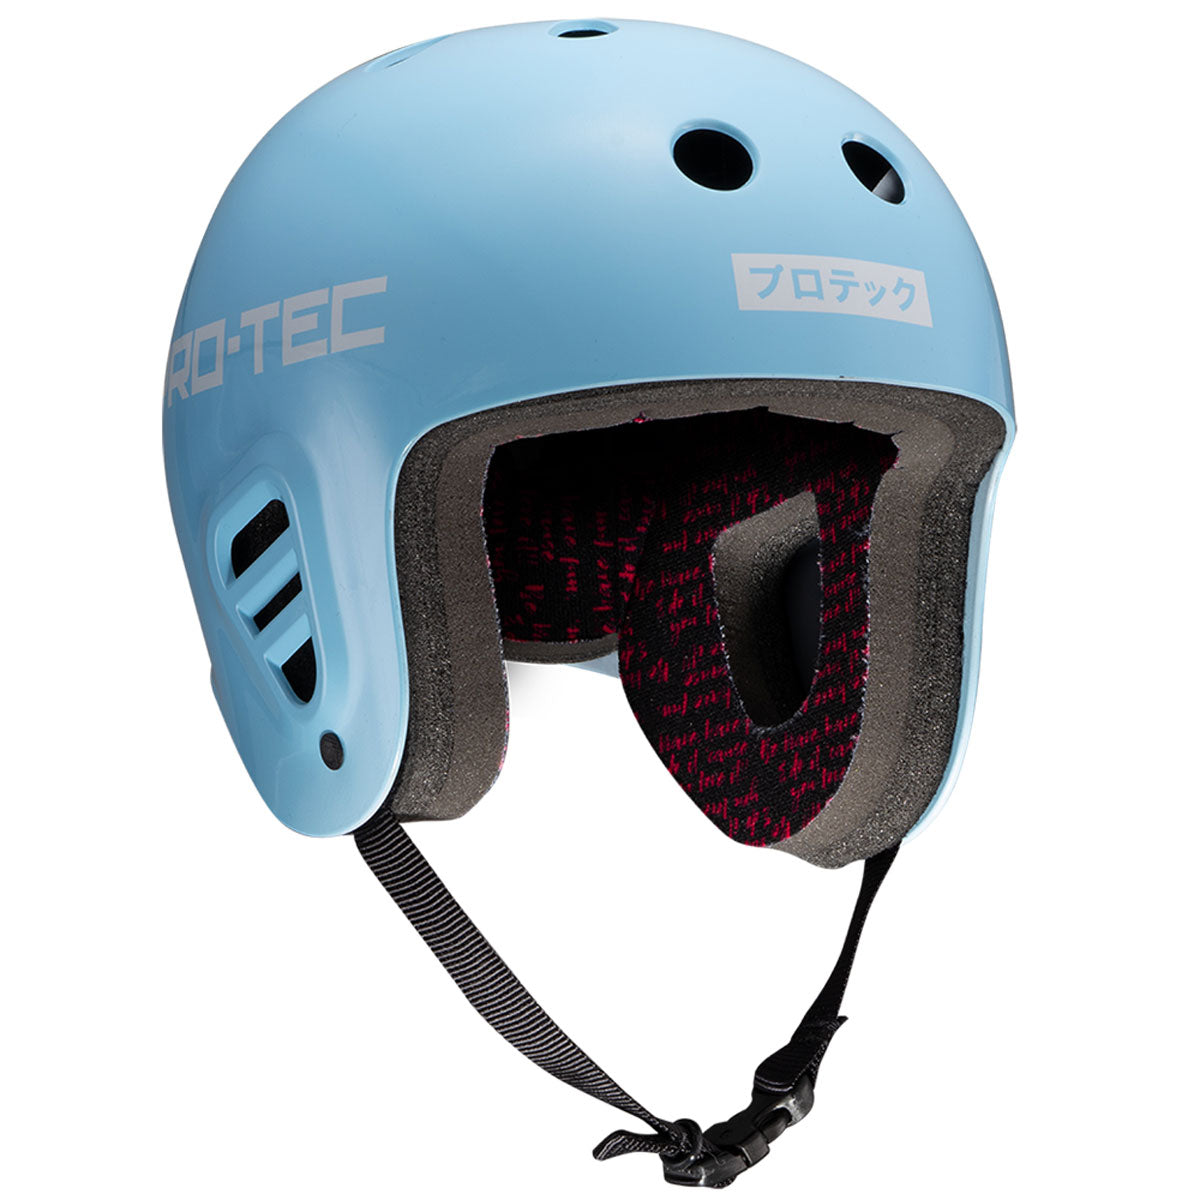 Pro Tec Full Cut Certified Sky Brown Pro Helmet - Blue image 1